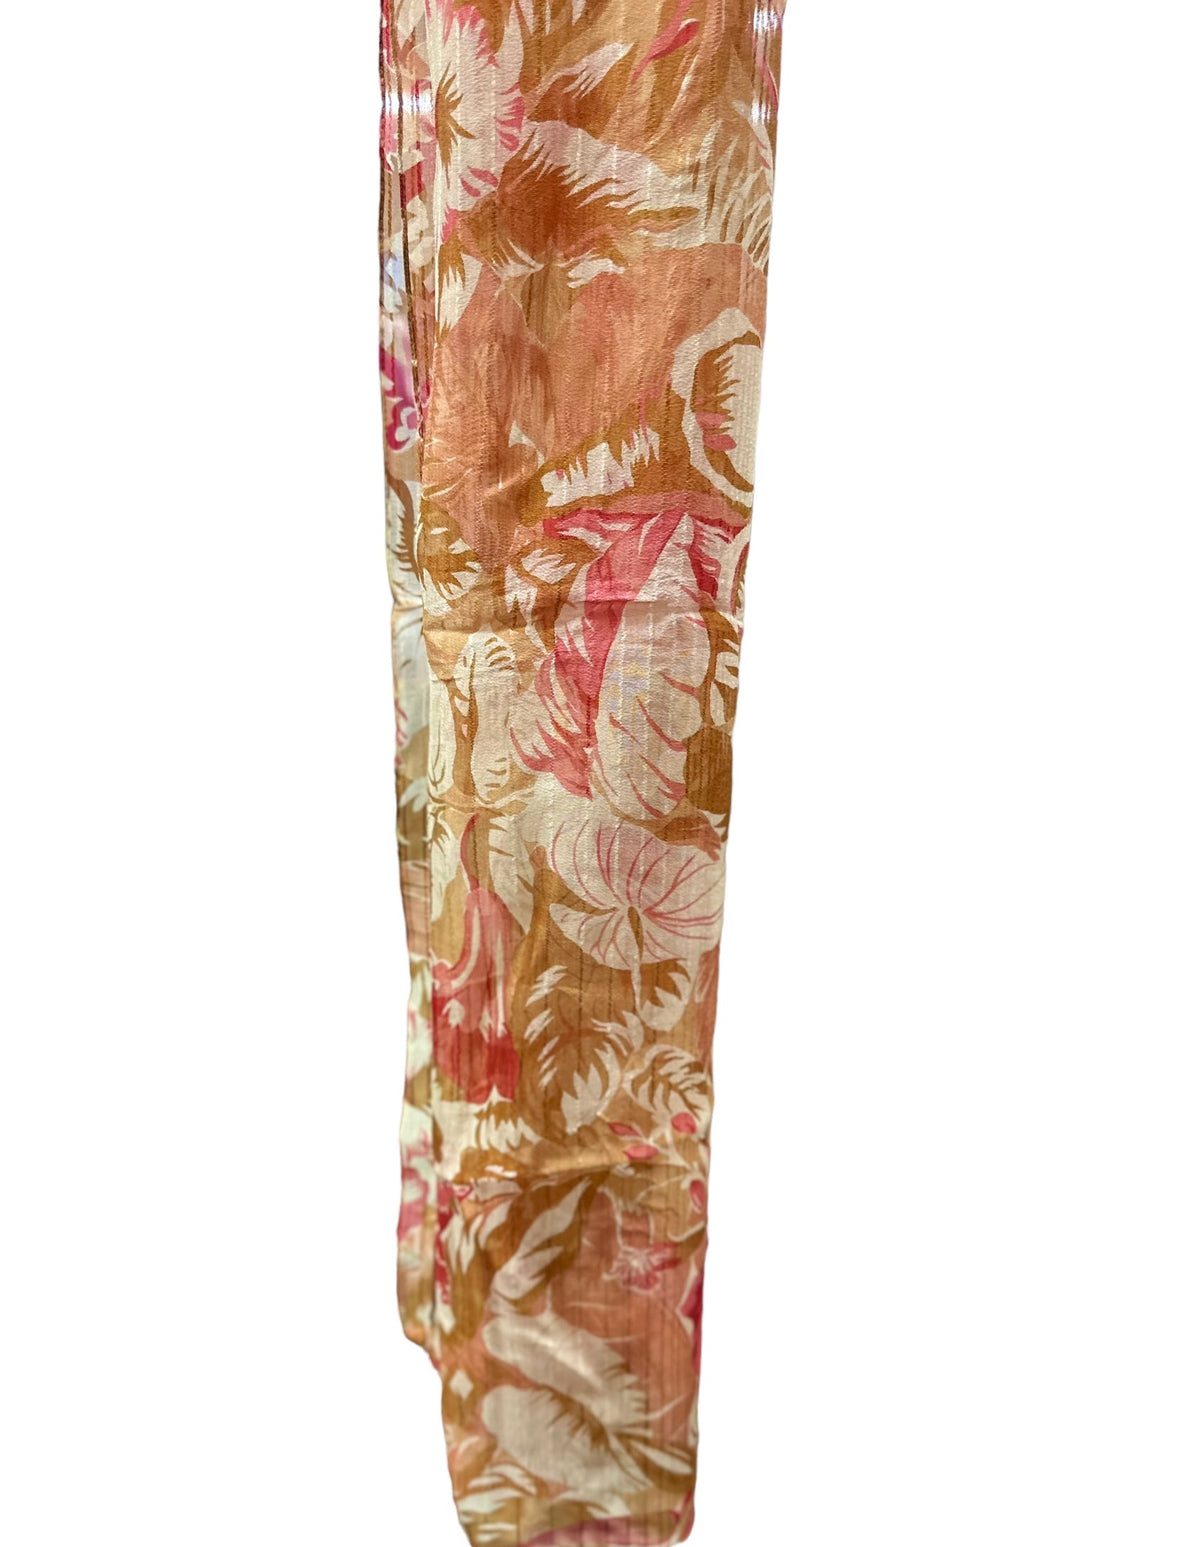 NEW! Tropical Print Silk Scarves